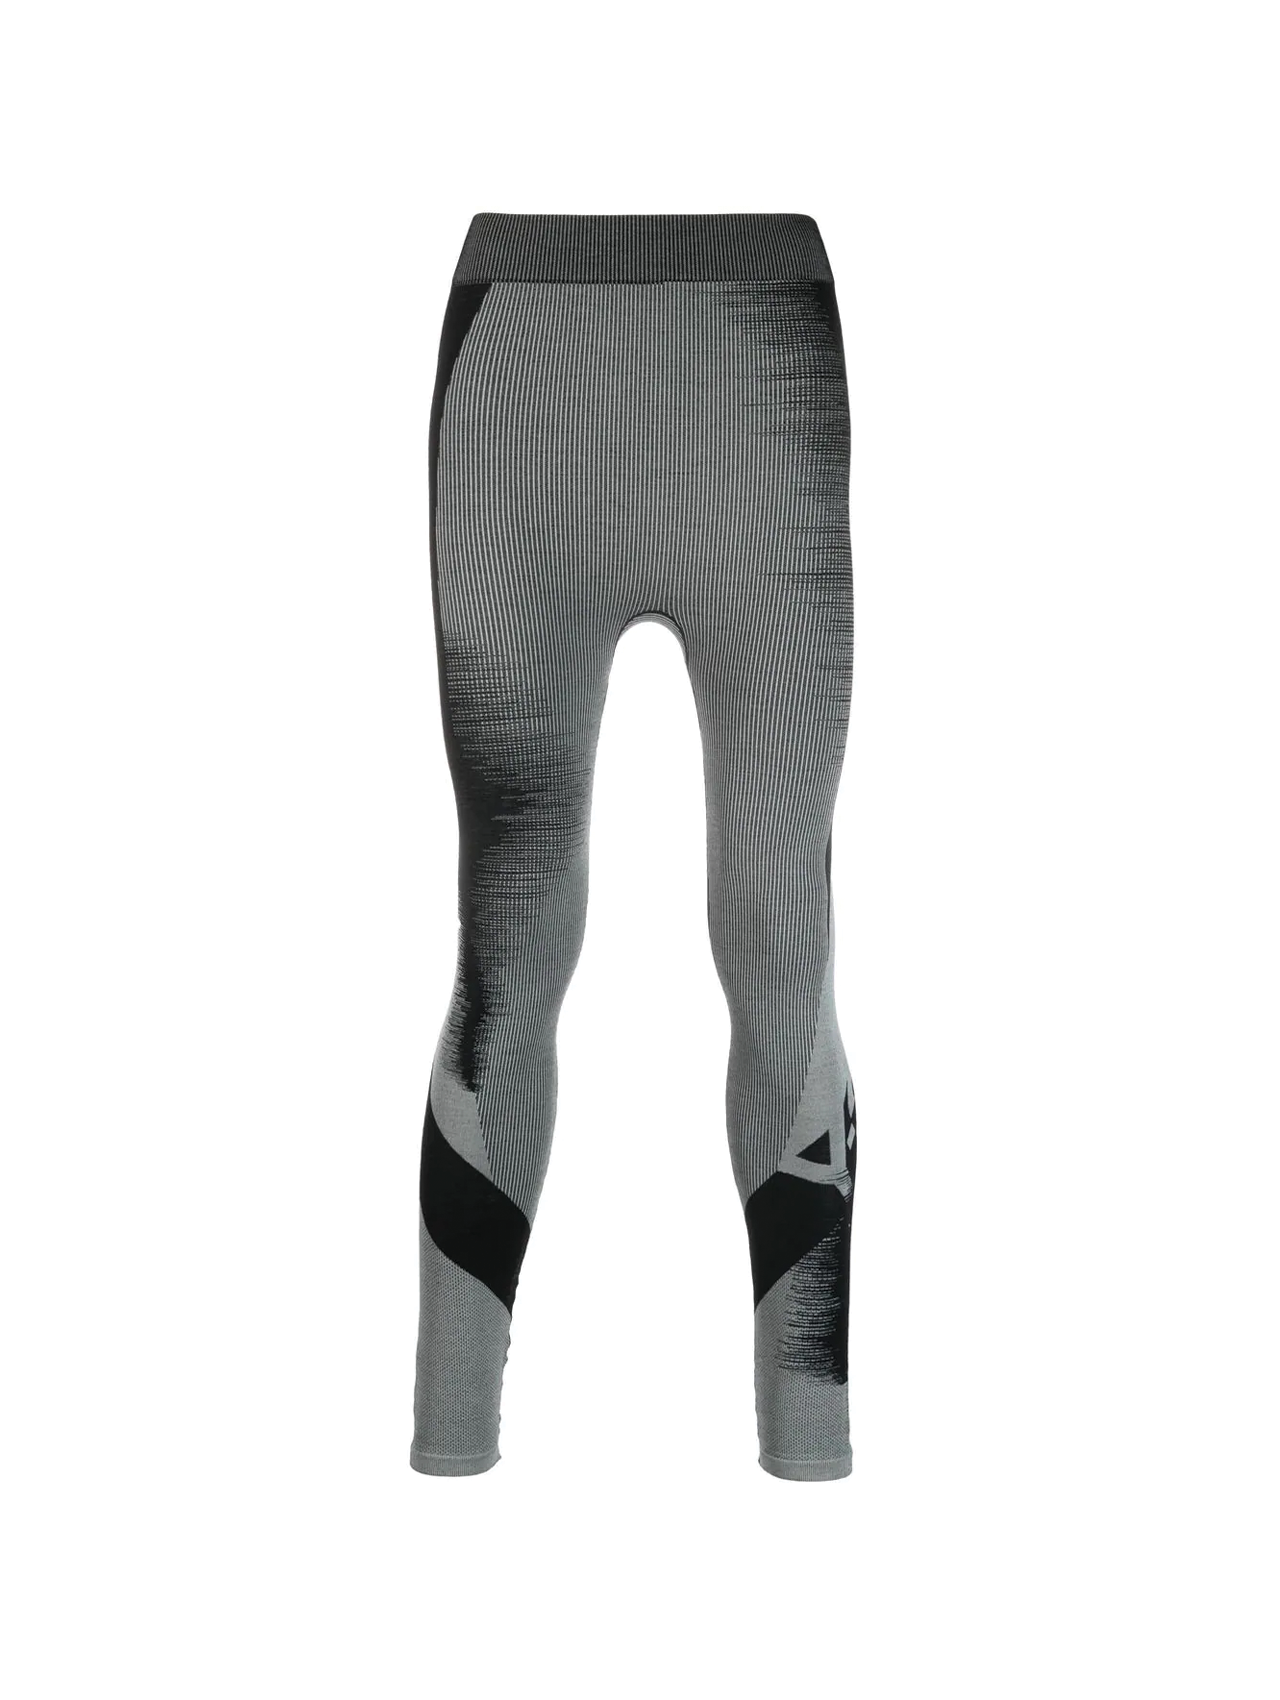 Y-3 Black/Grey Engineered Knit Tights